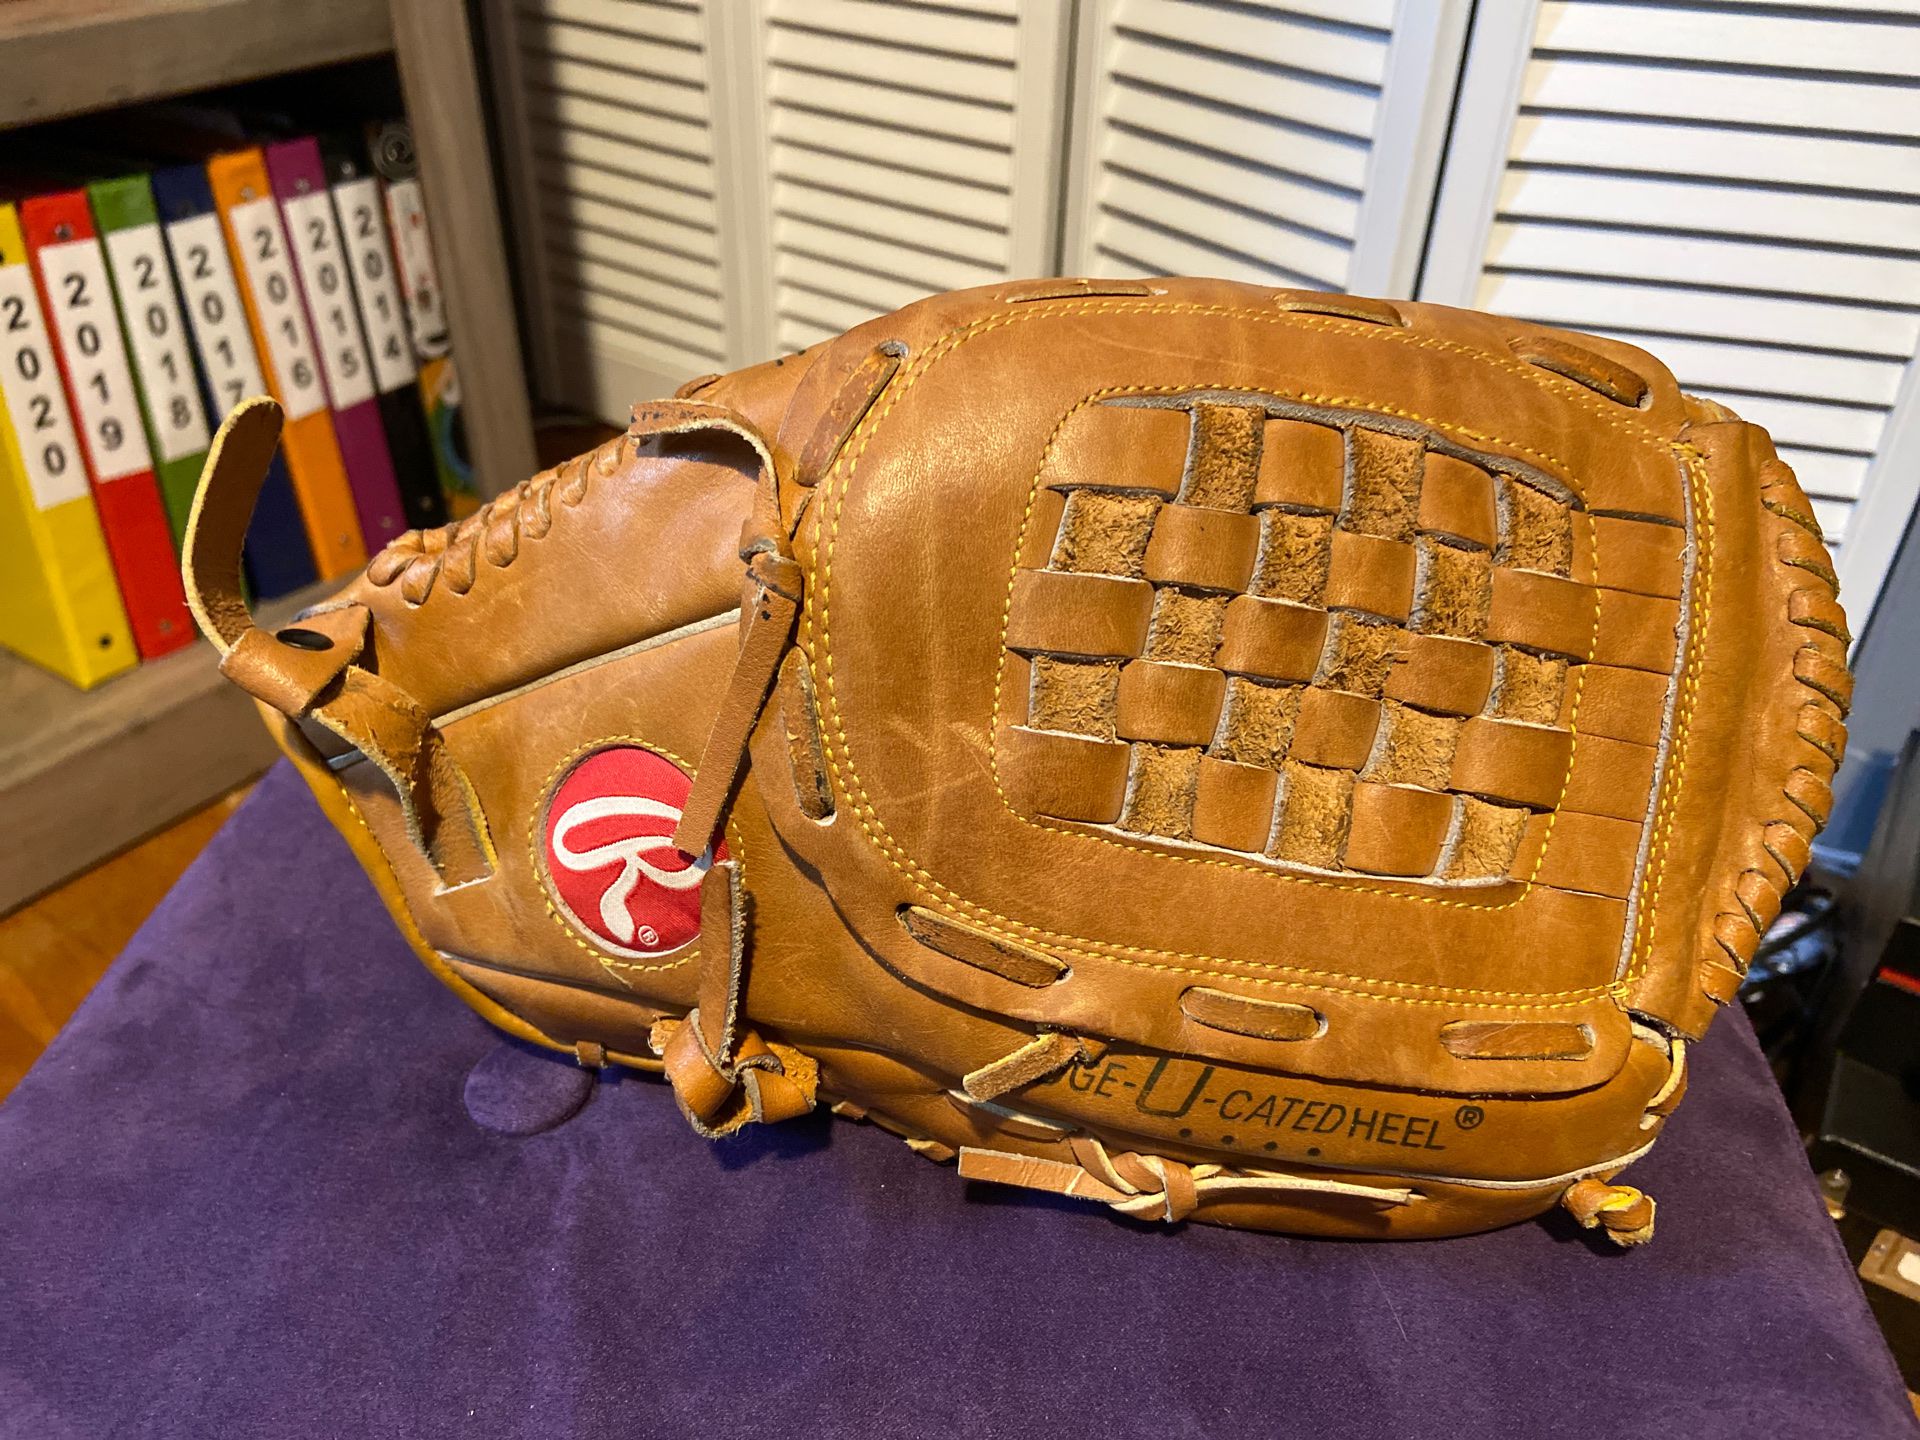 Rawlings RBG 13” softball glove